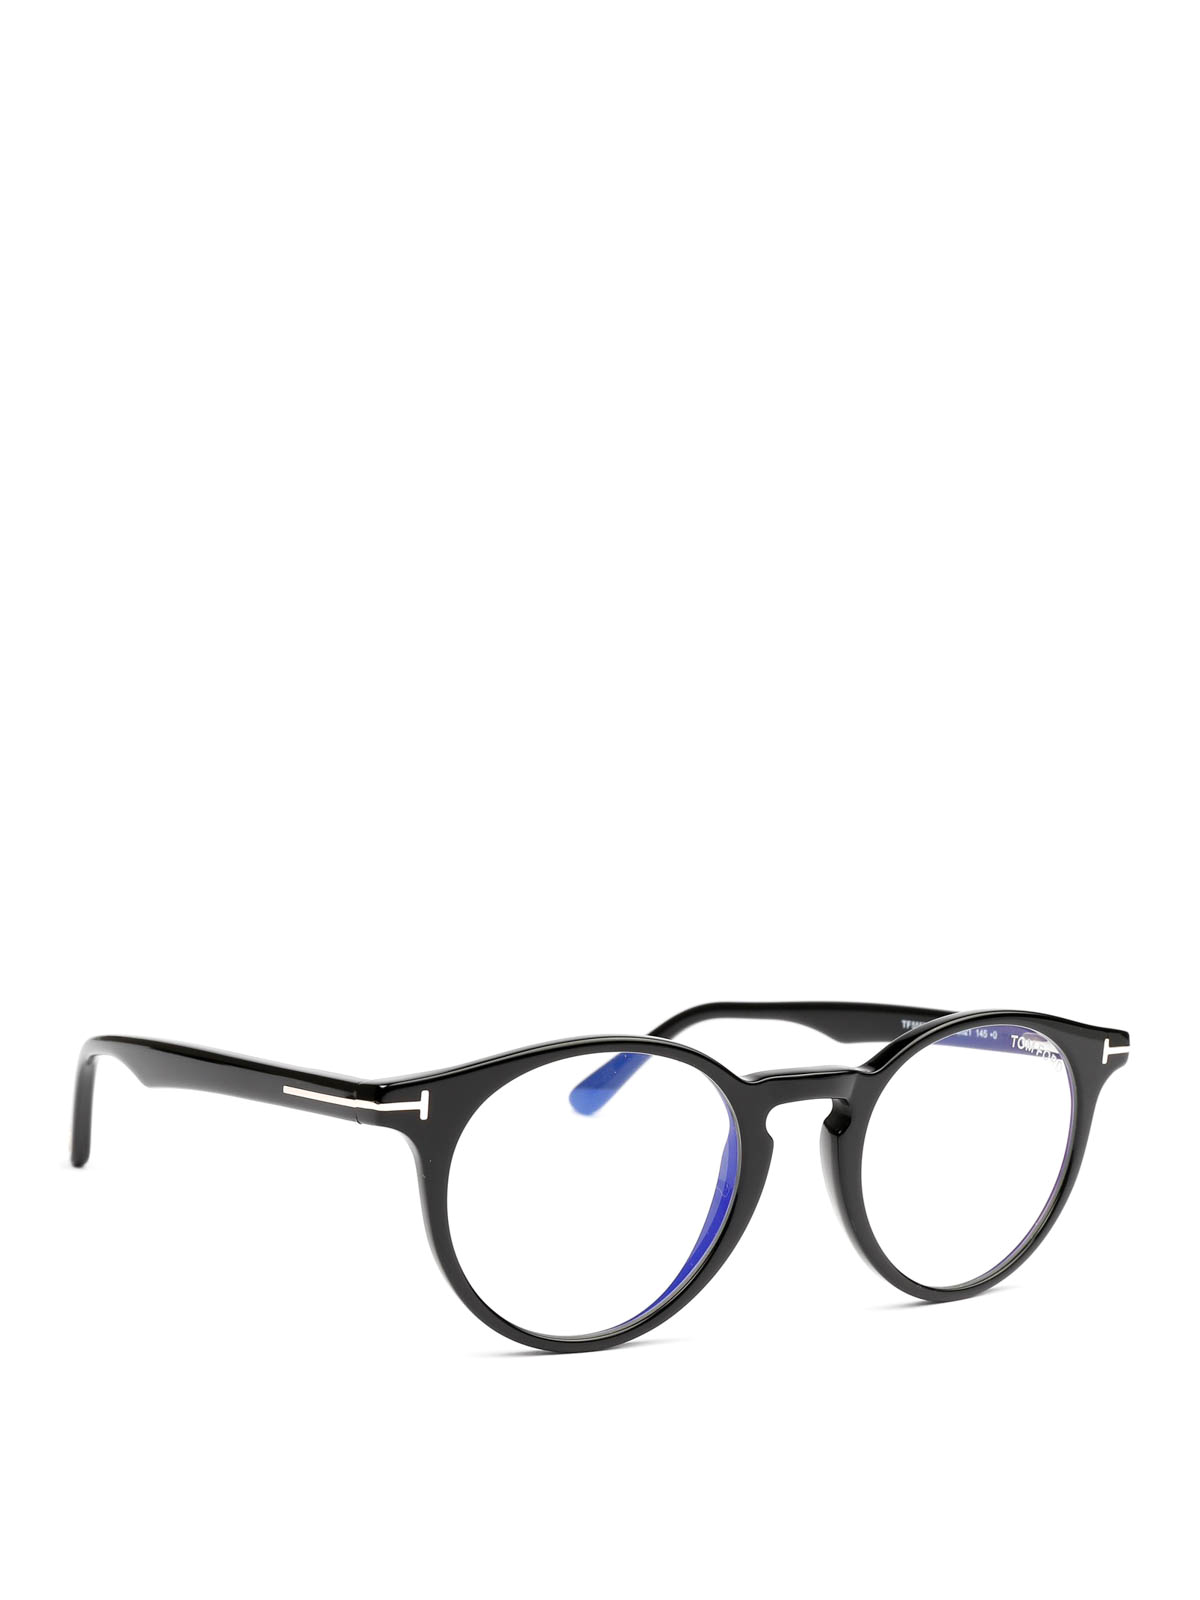 Glasses Tom Ford - Black round glasses - FT5557B001 | Shop online at iKRIX